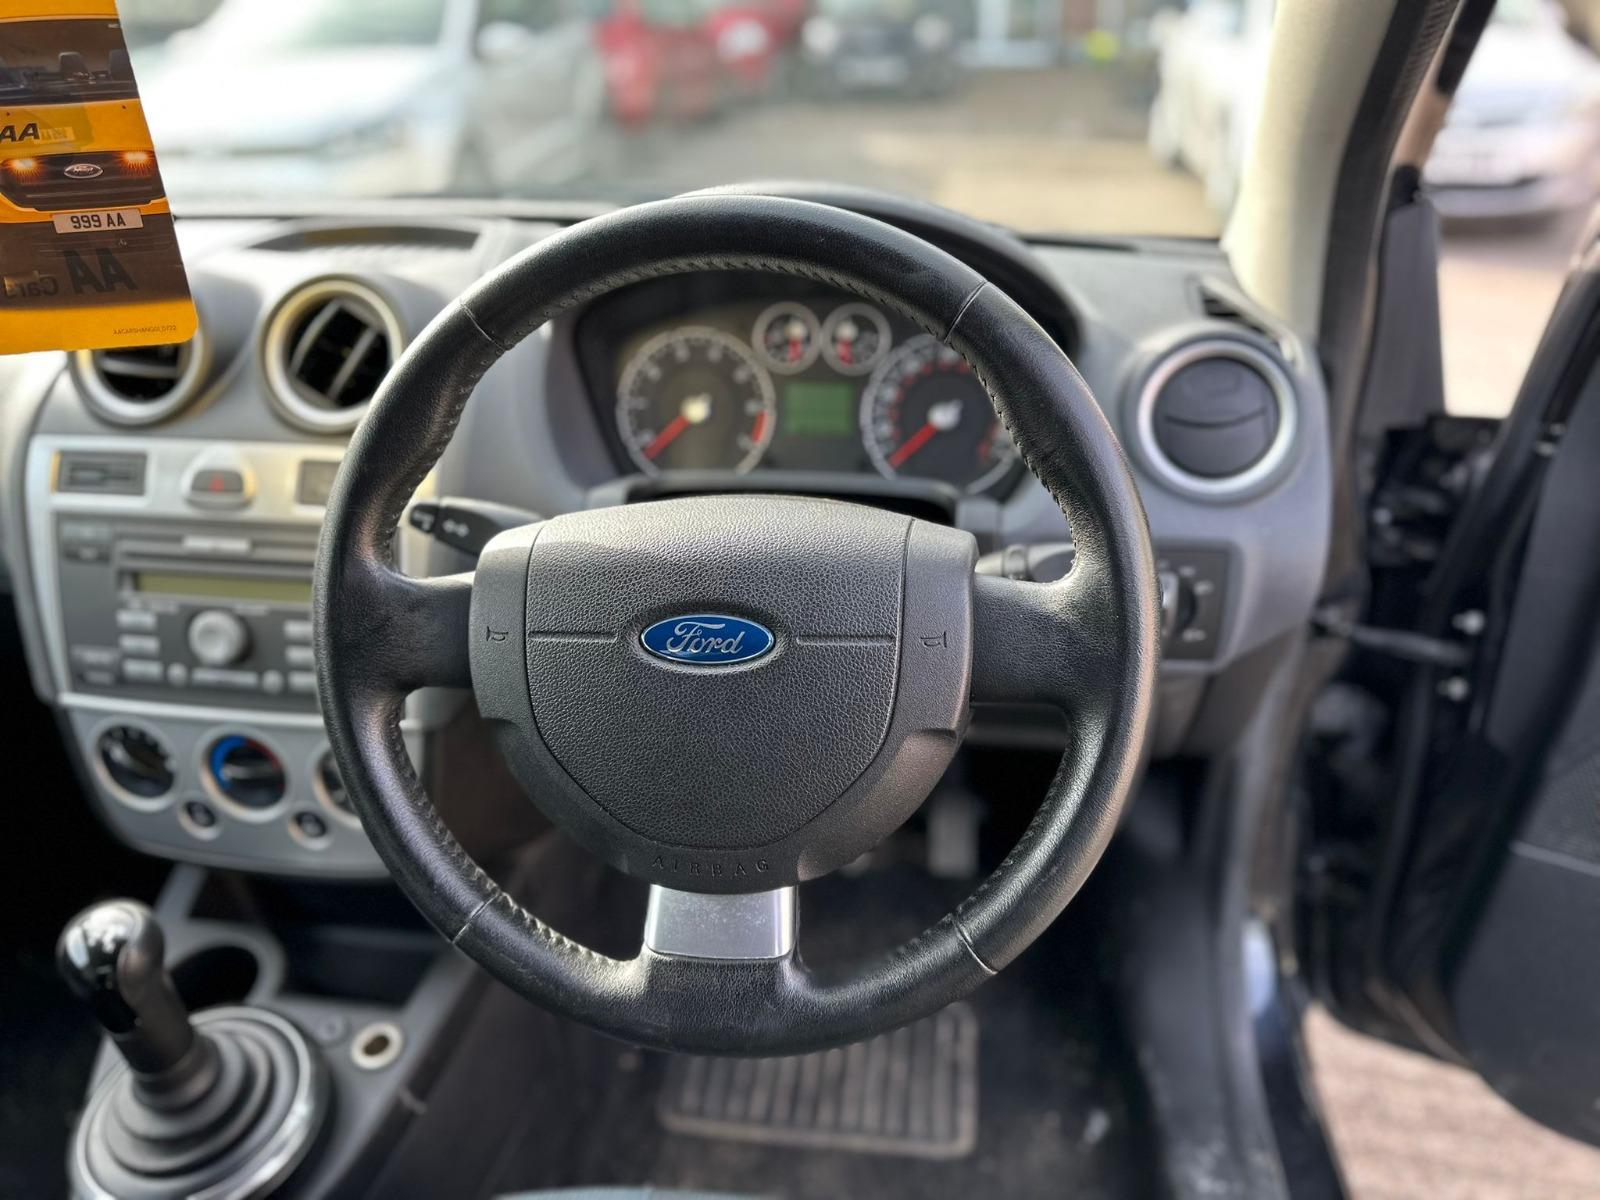 Ford Fiesta 1.4 Zetec Climate Hatchback 3dr Petrol Durashift EST (142 g/km, 79 bhp)